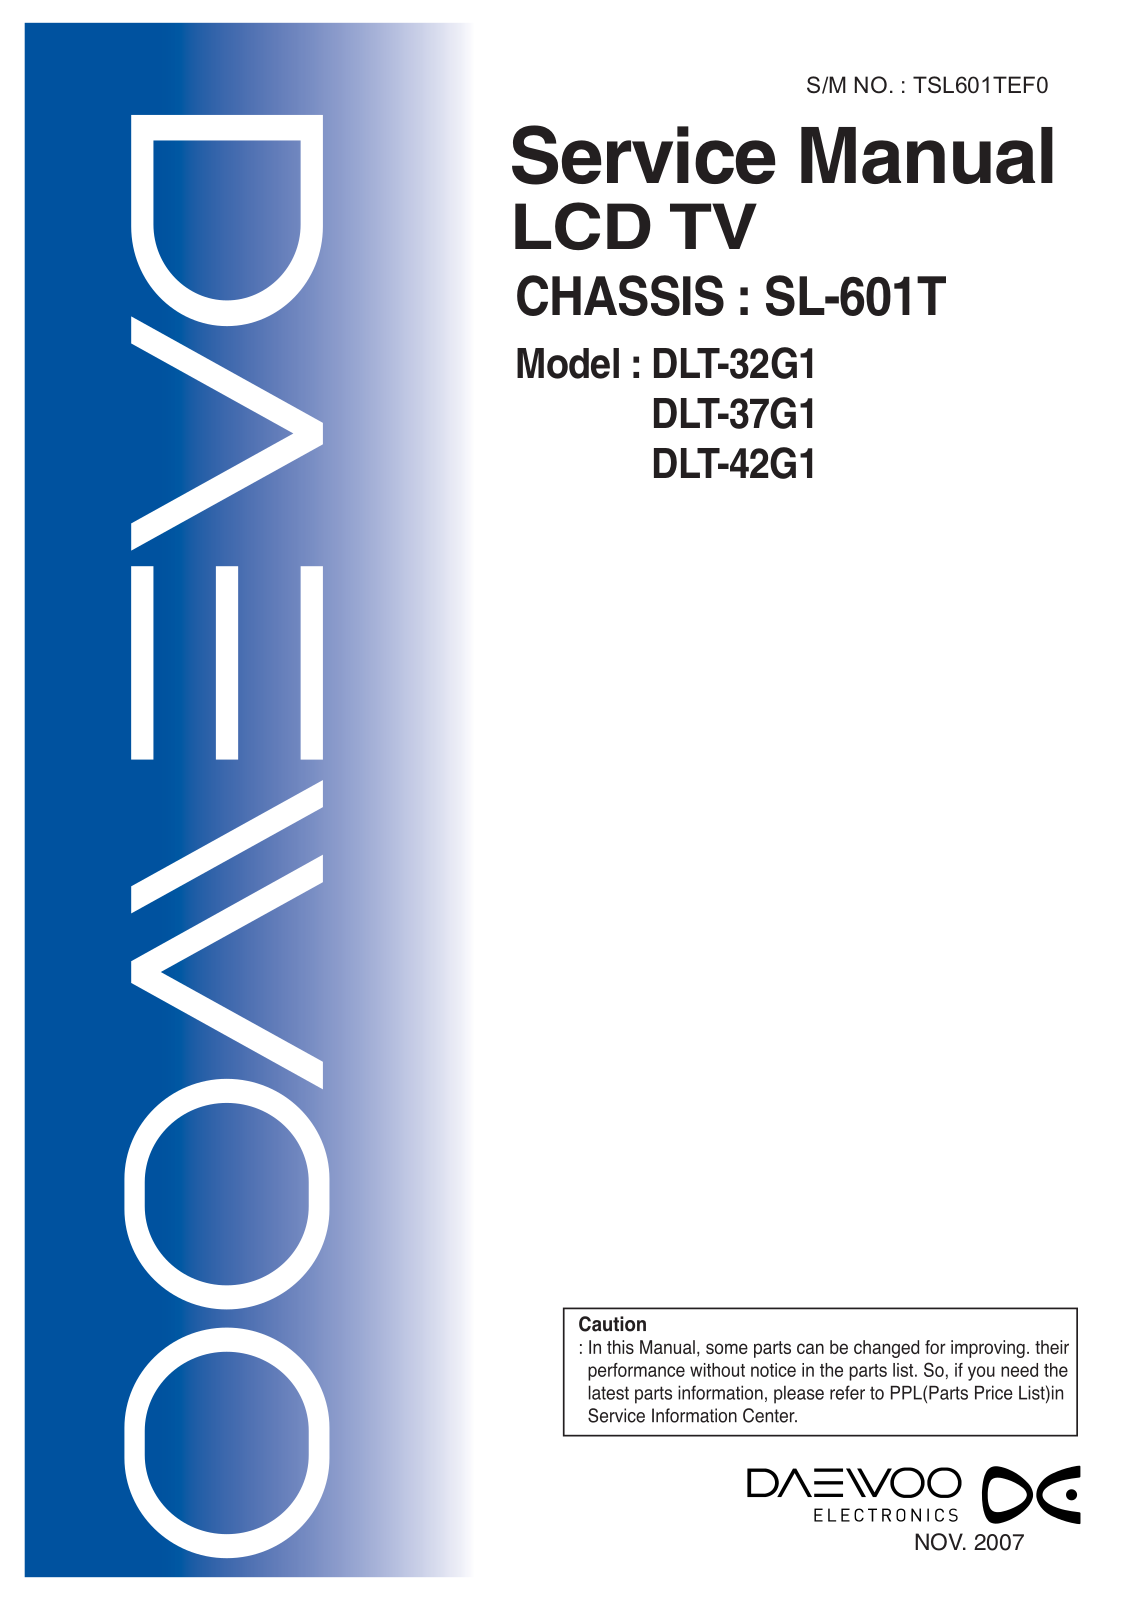 Daewoo SL-601T Service Manual